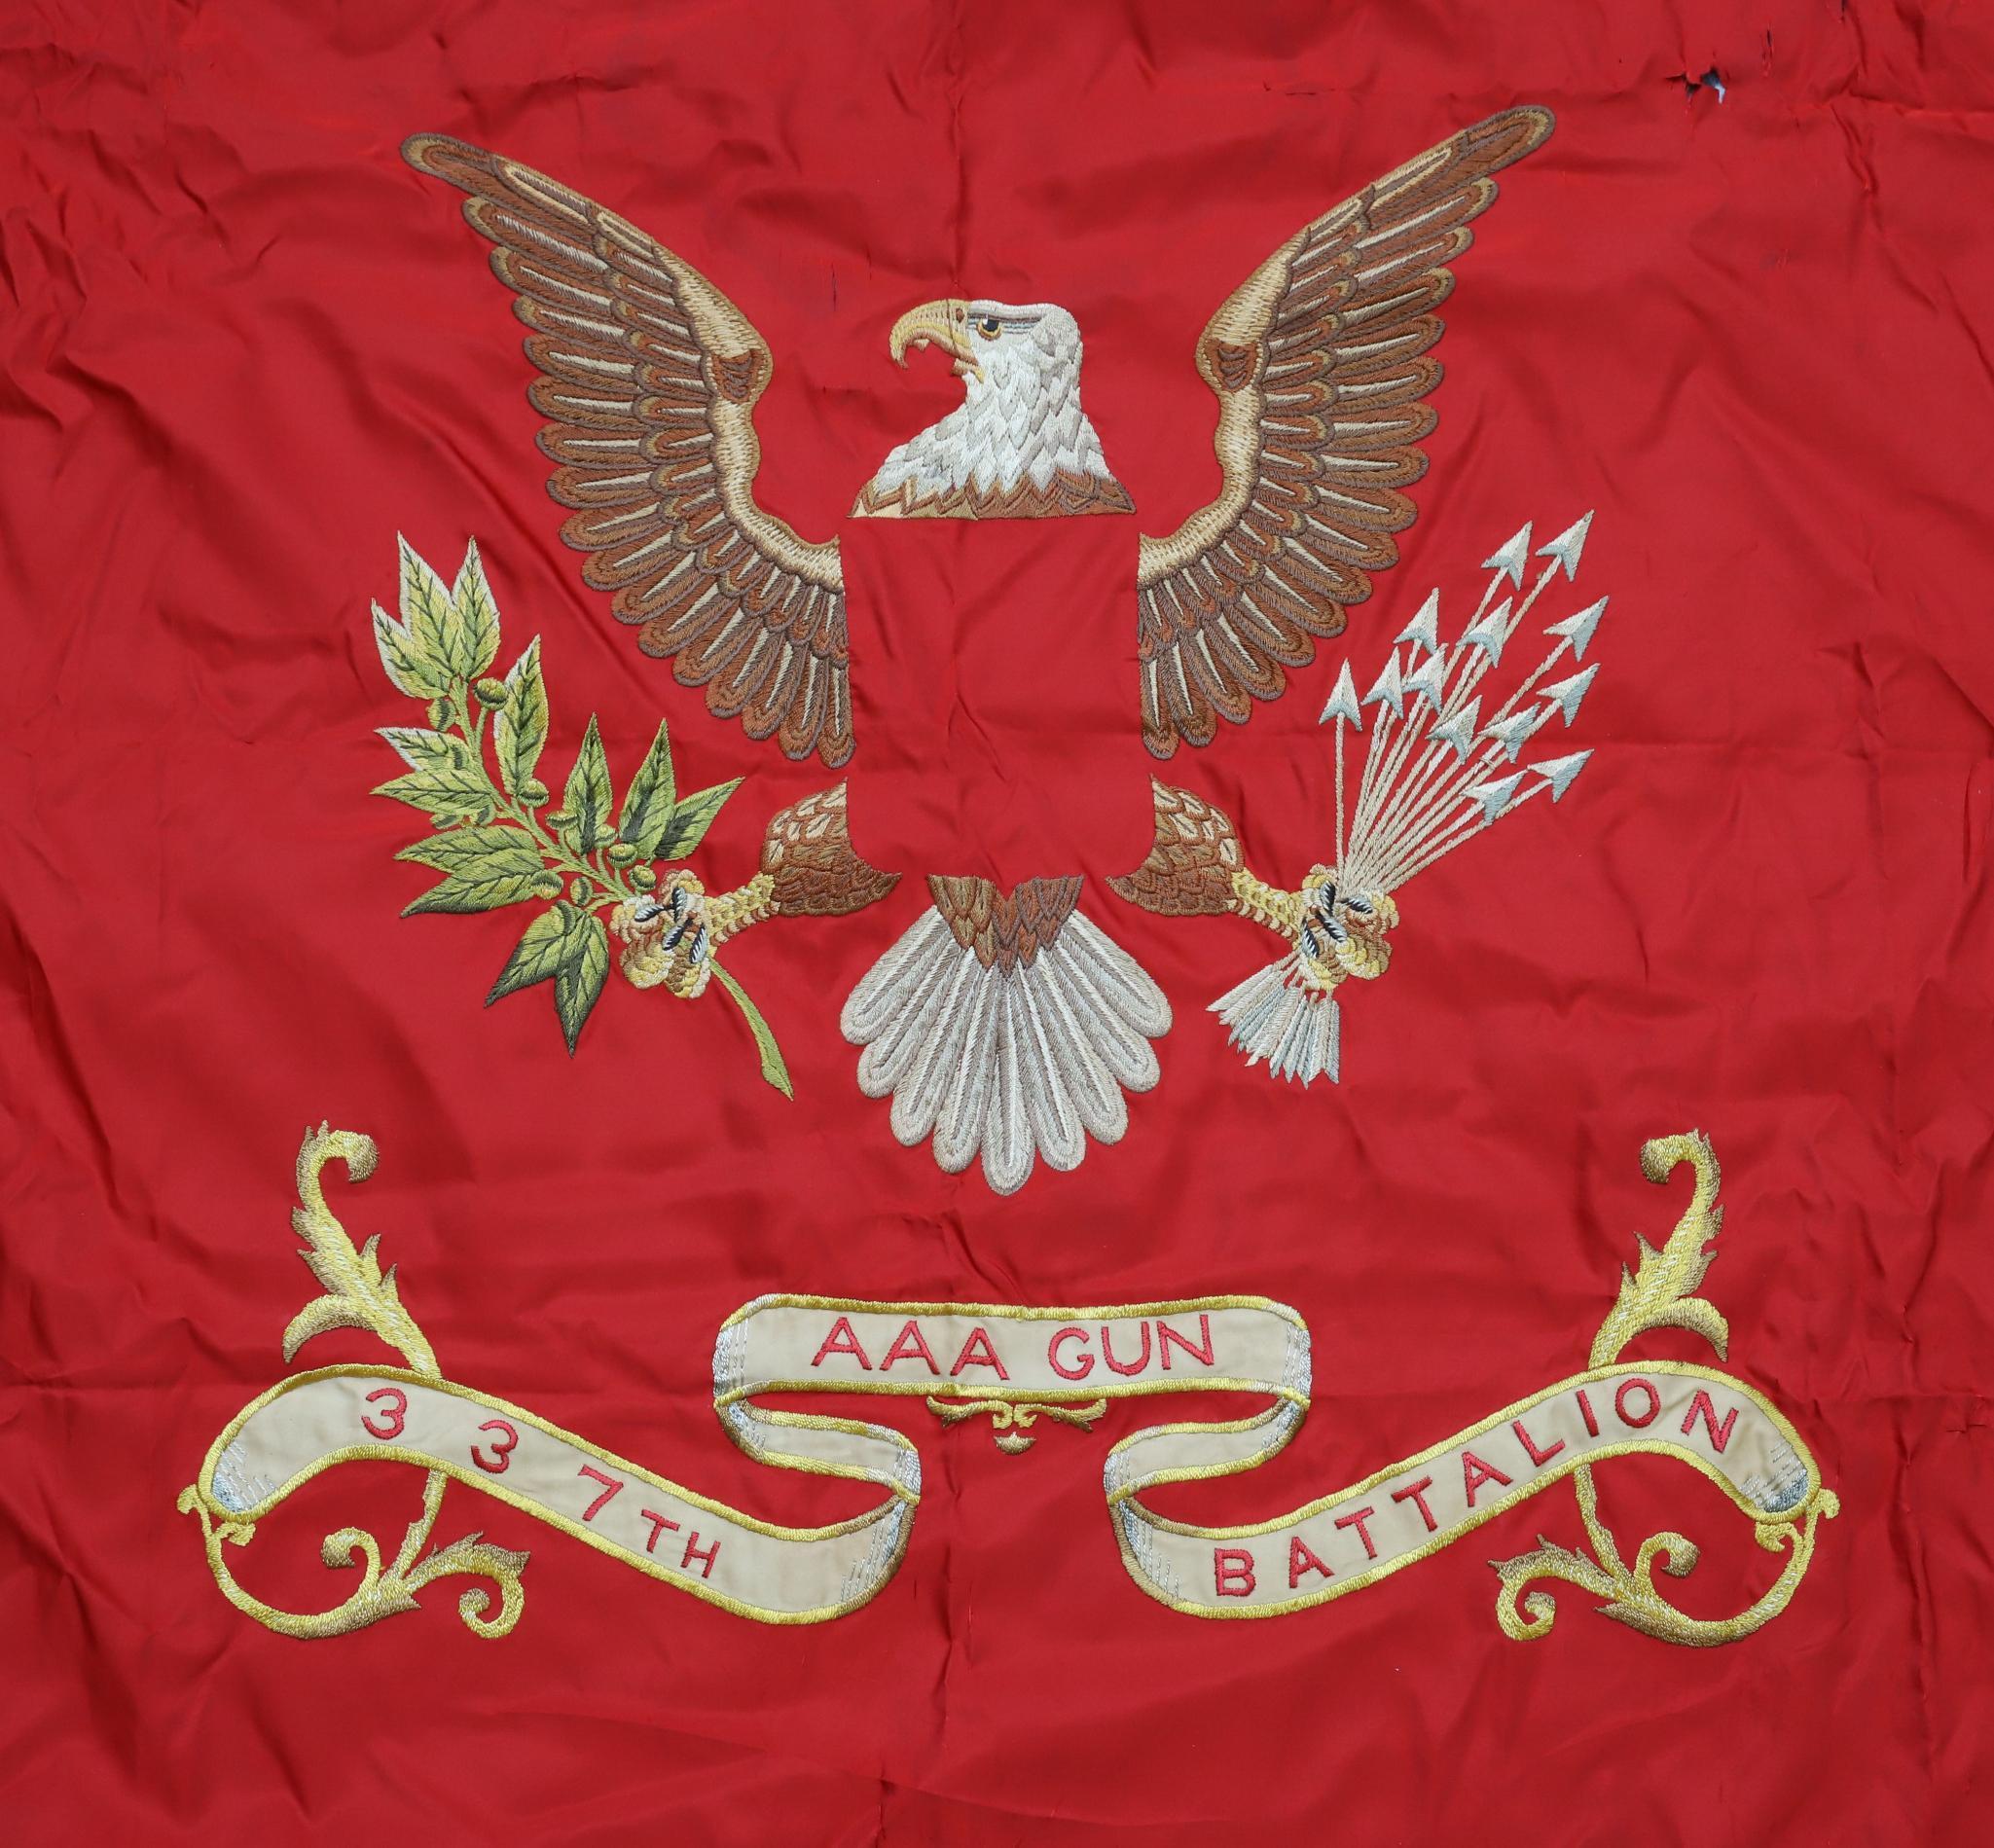 Military Flag-337th AAA